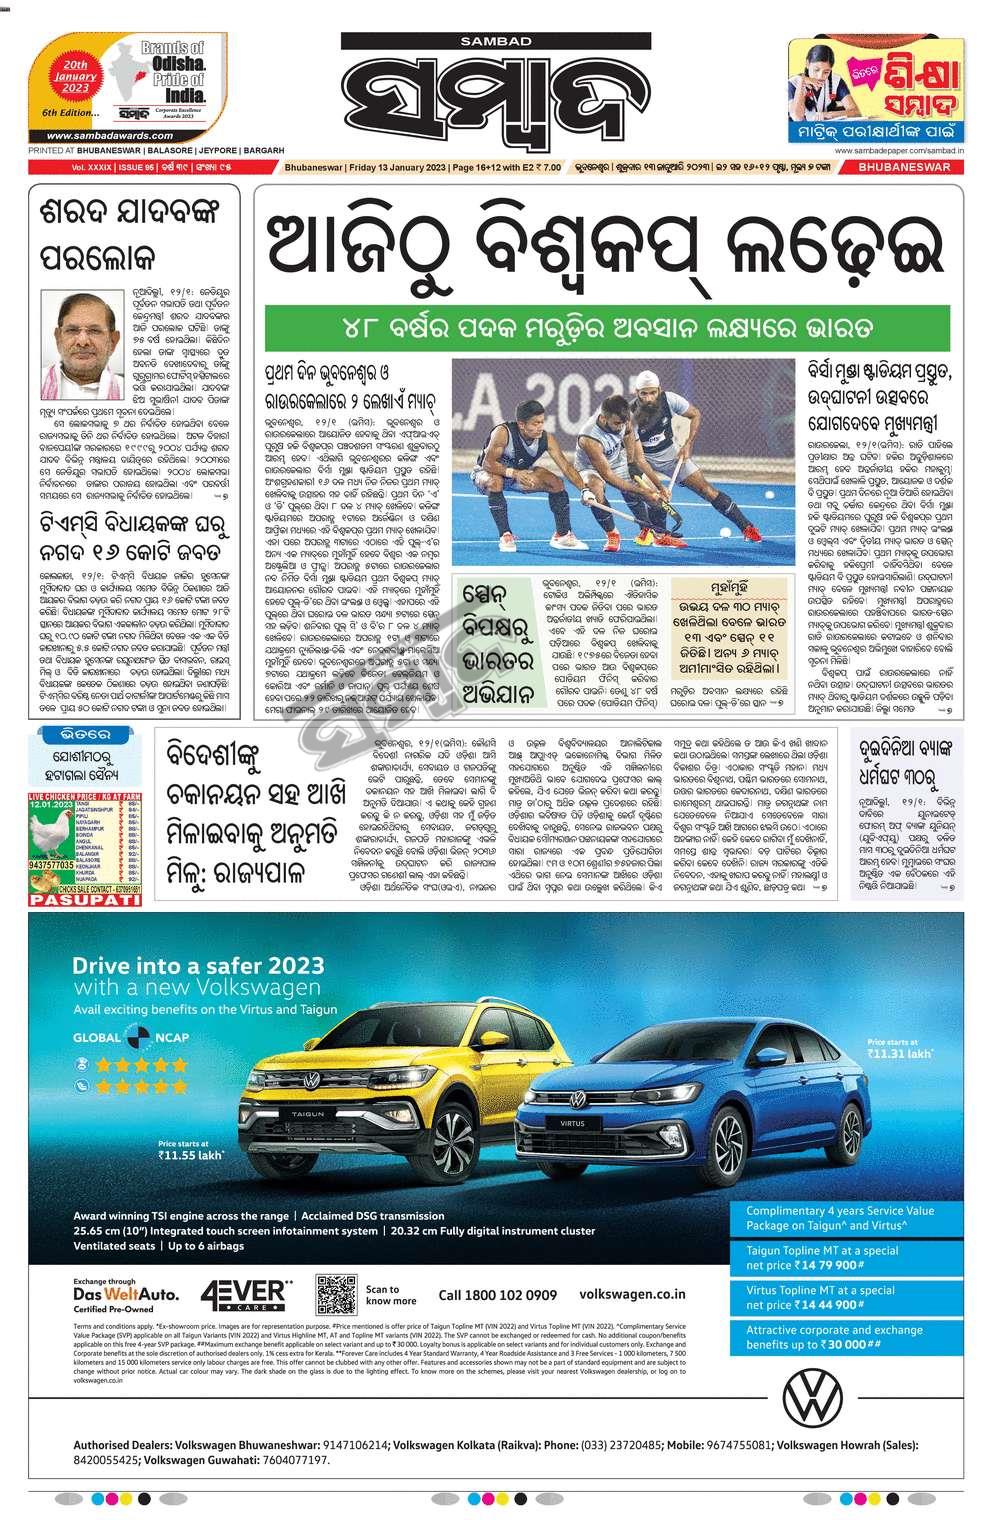 Sambad ePaper : No 1 newpaper of Odisha | Odisha epaper, News paper Odisha  , BHUBANESWAR Sambad epaper 